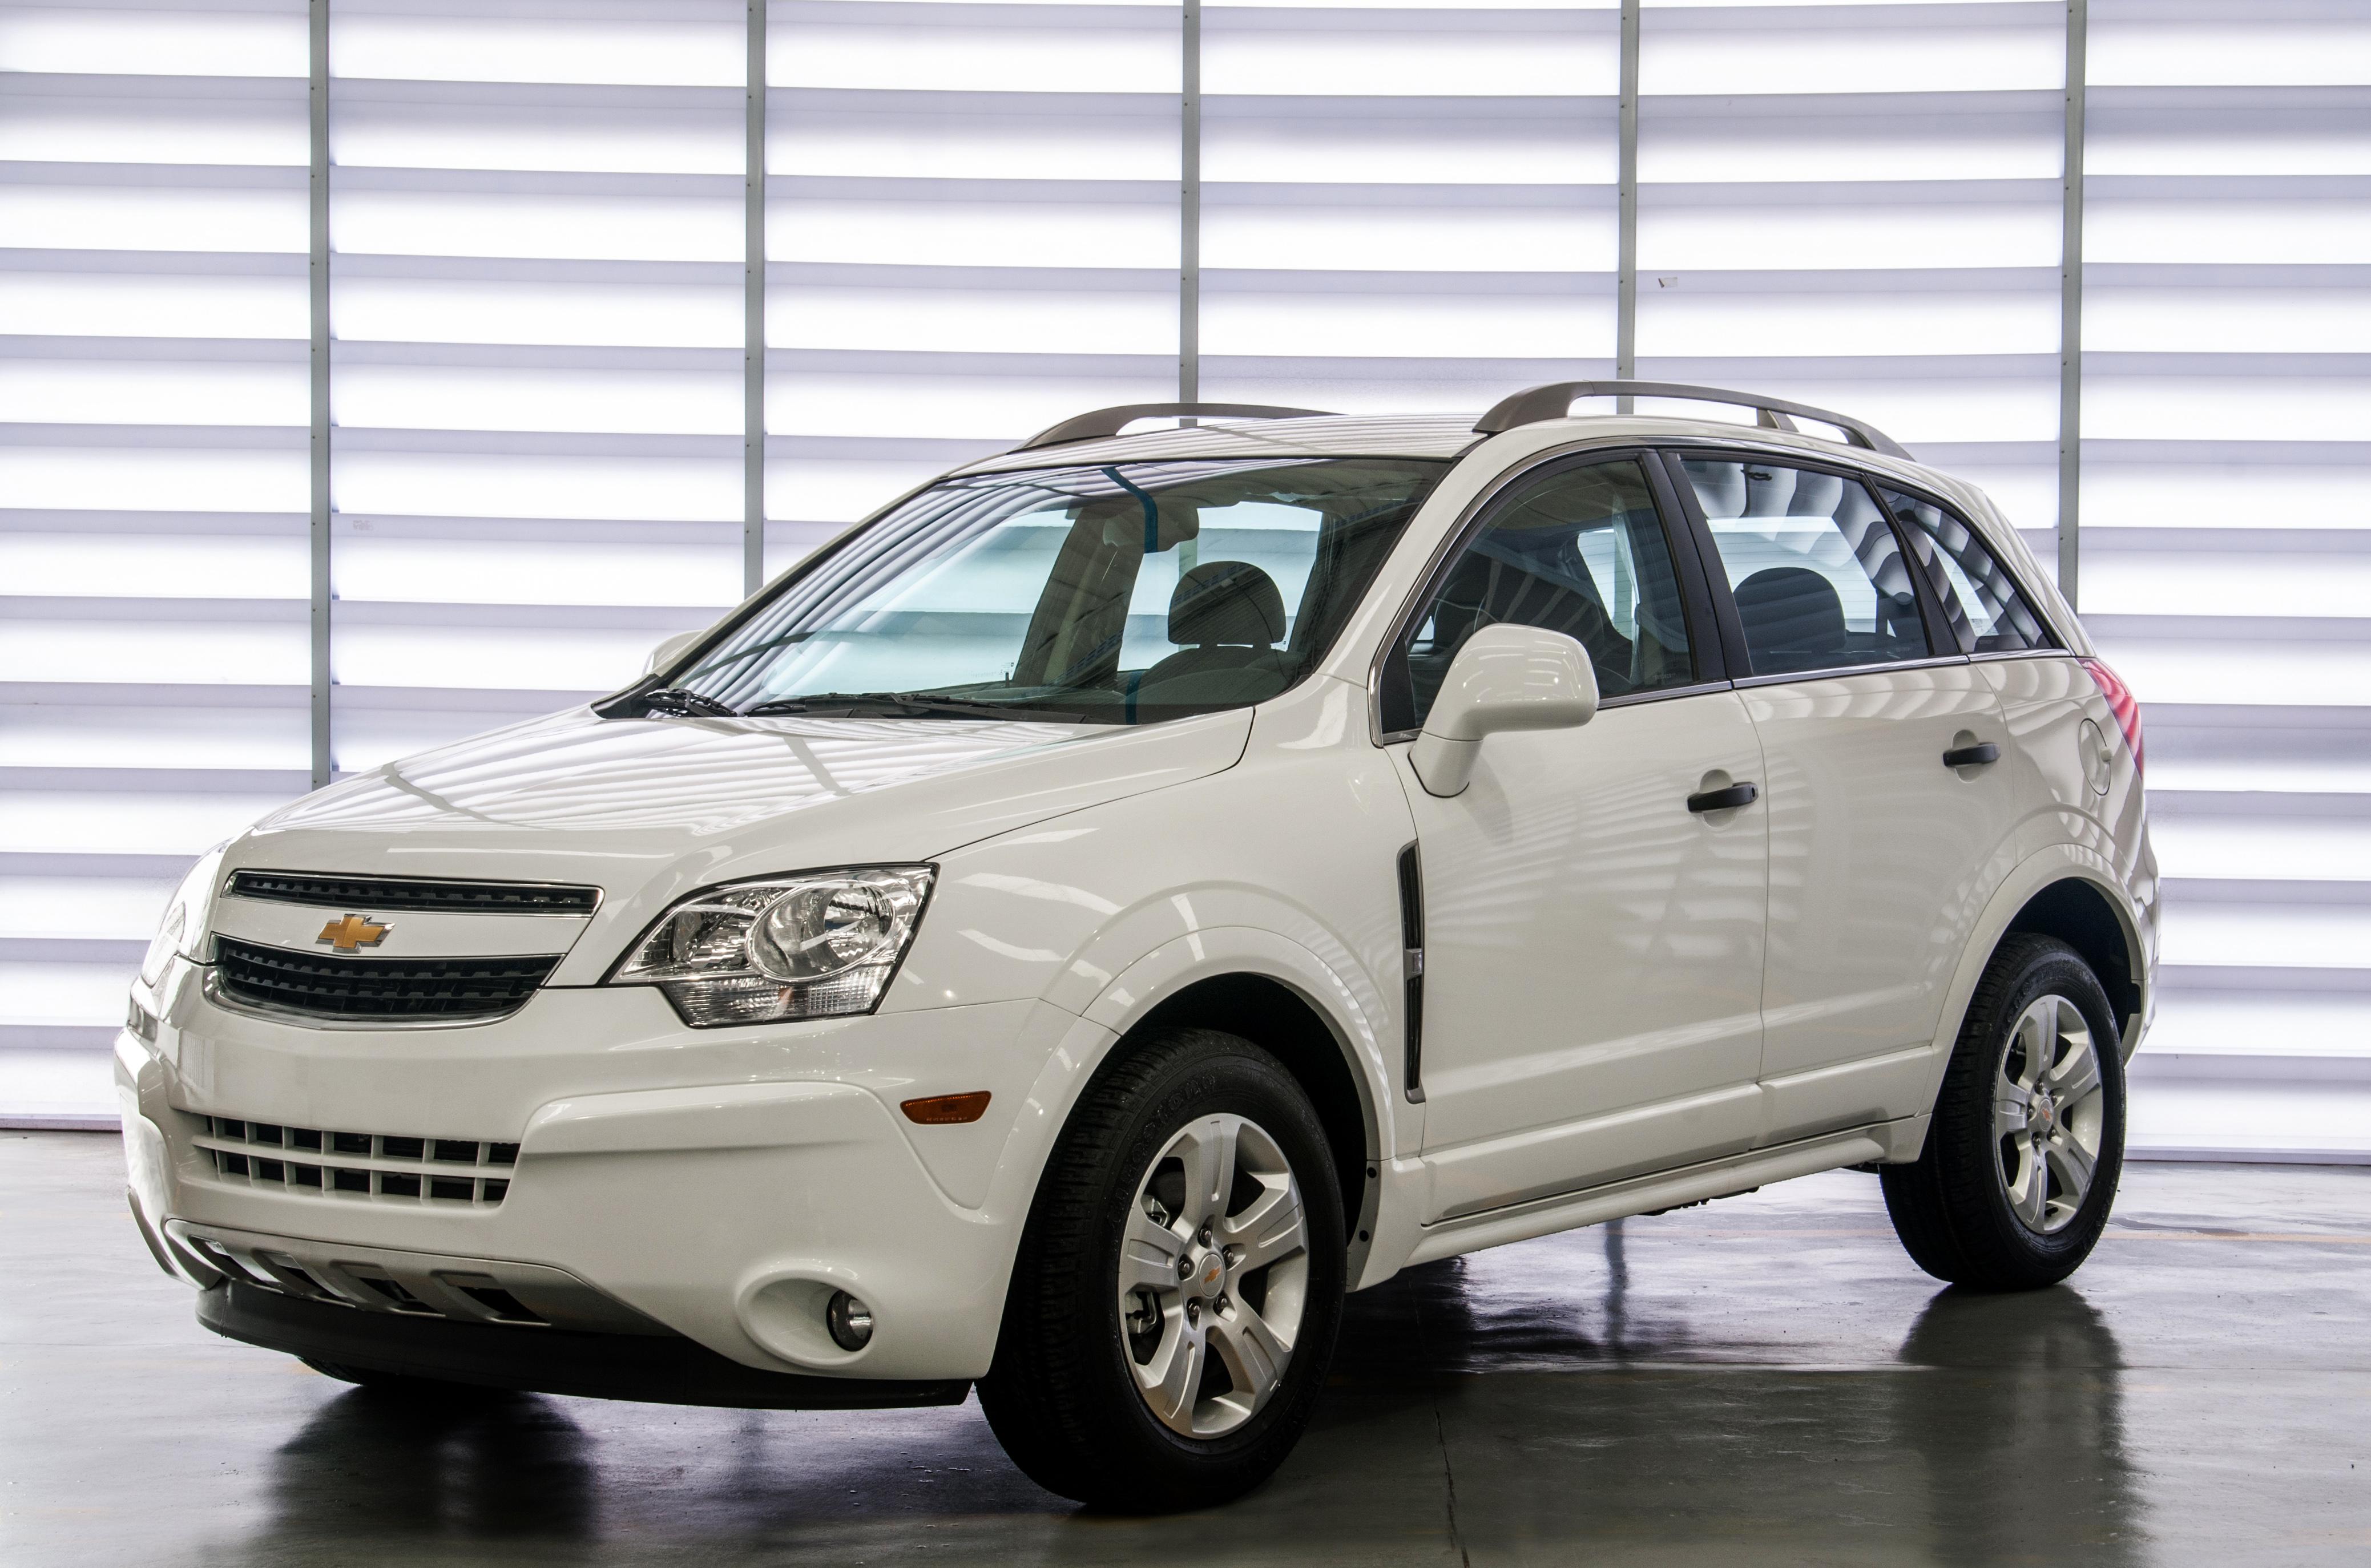 Chevrolet lança SUV Captiva 2.4 litro anomodelo 2014